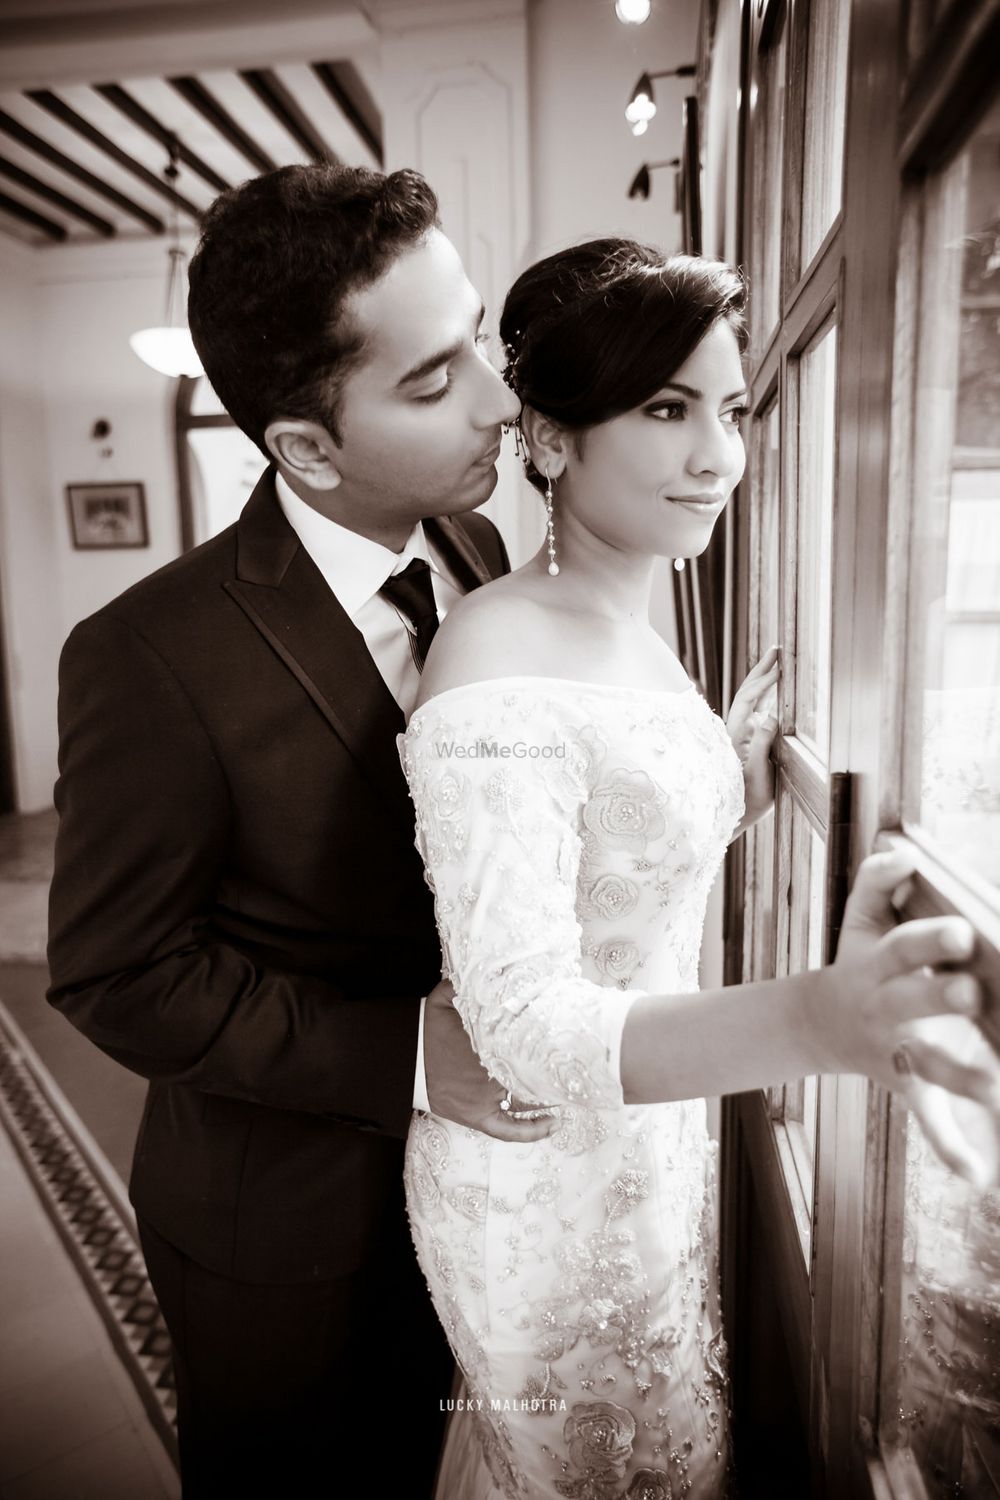 Photo From Wedding Portfolio - By Lucky Malhotra Photography